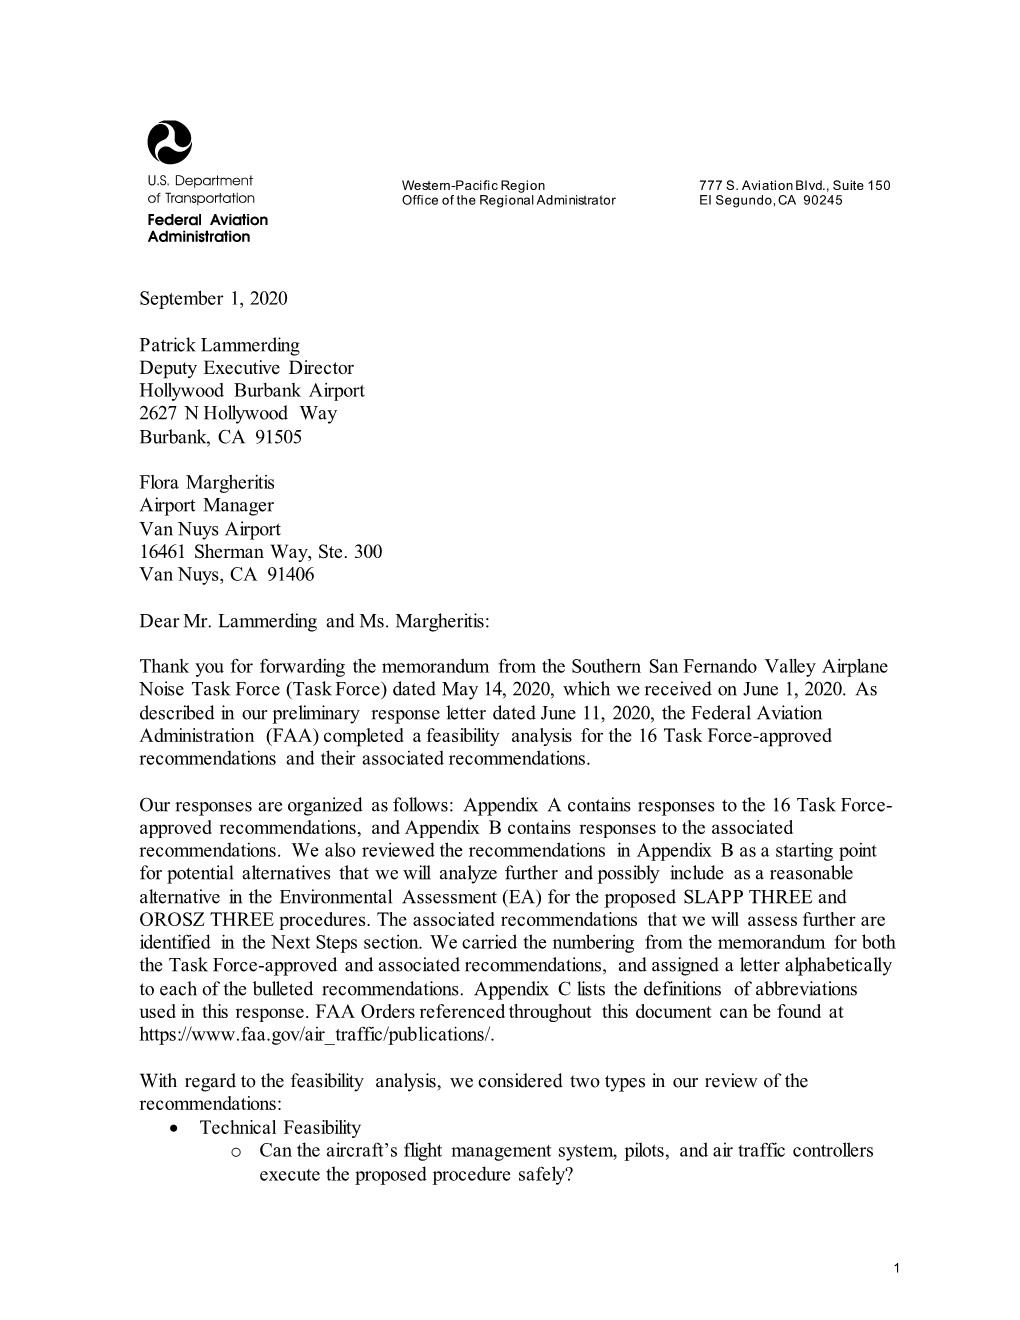 FAA Response Letter 9.1.2020